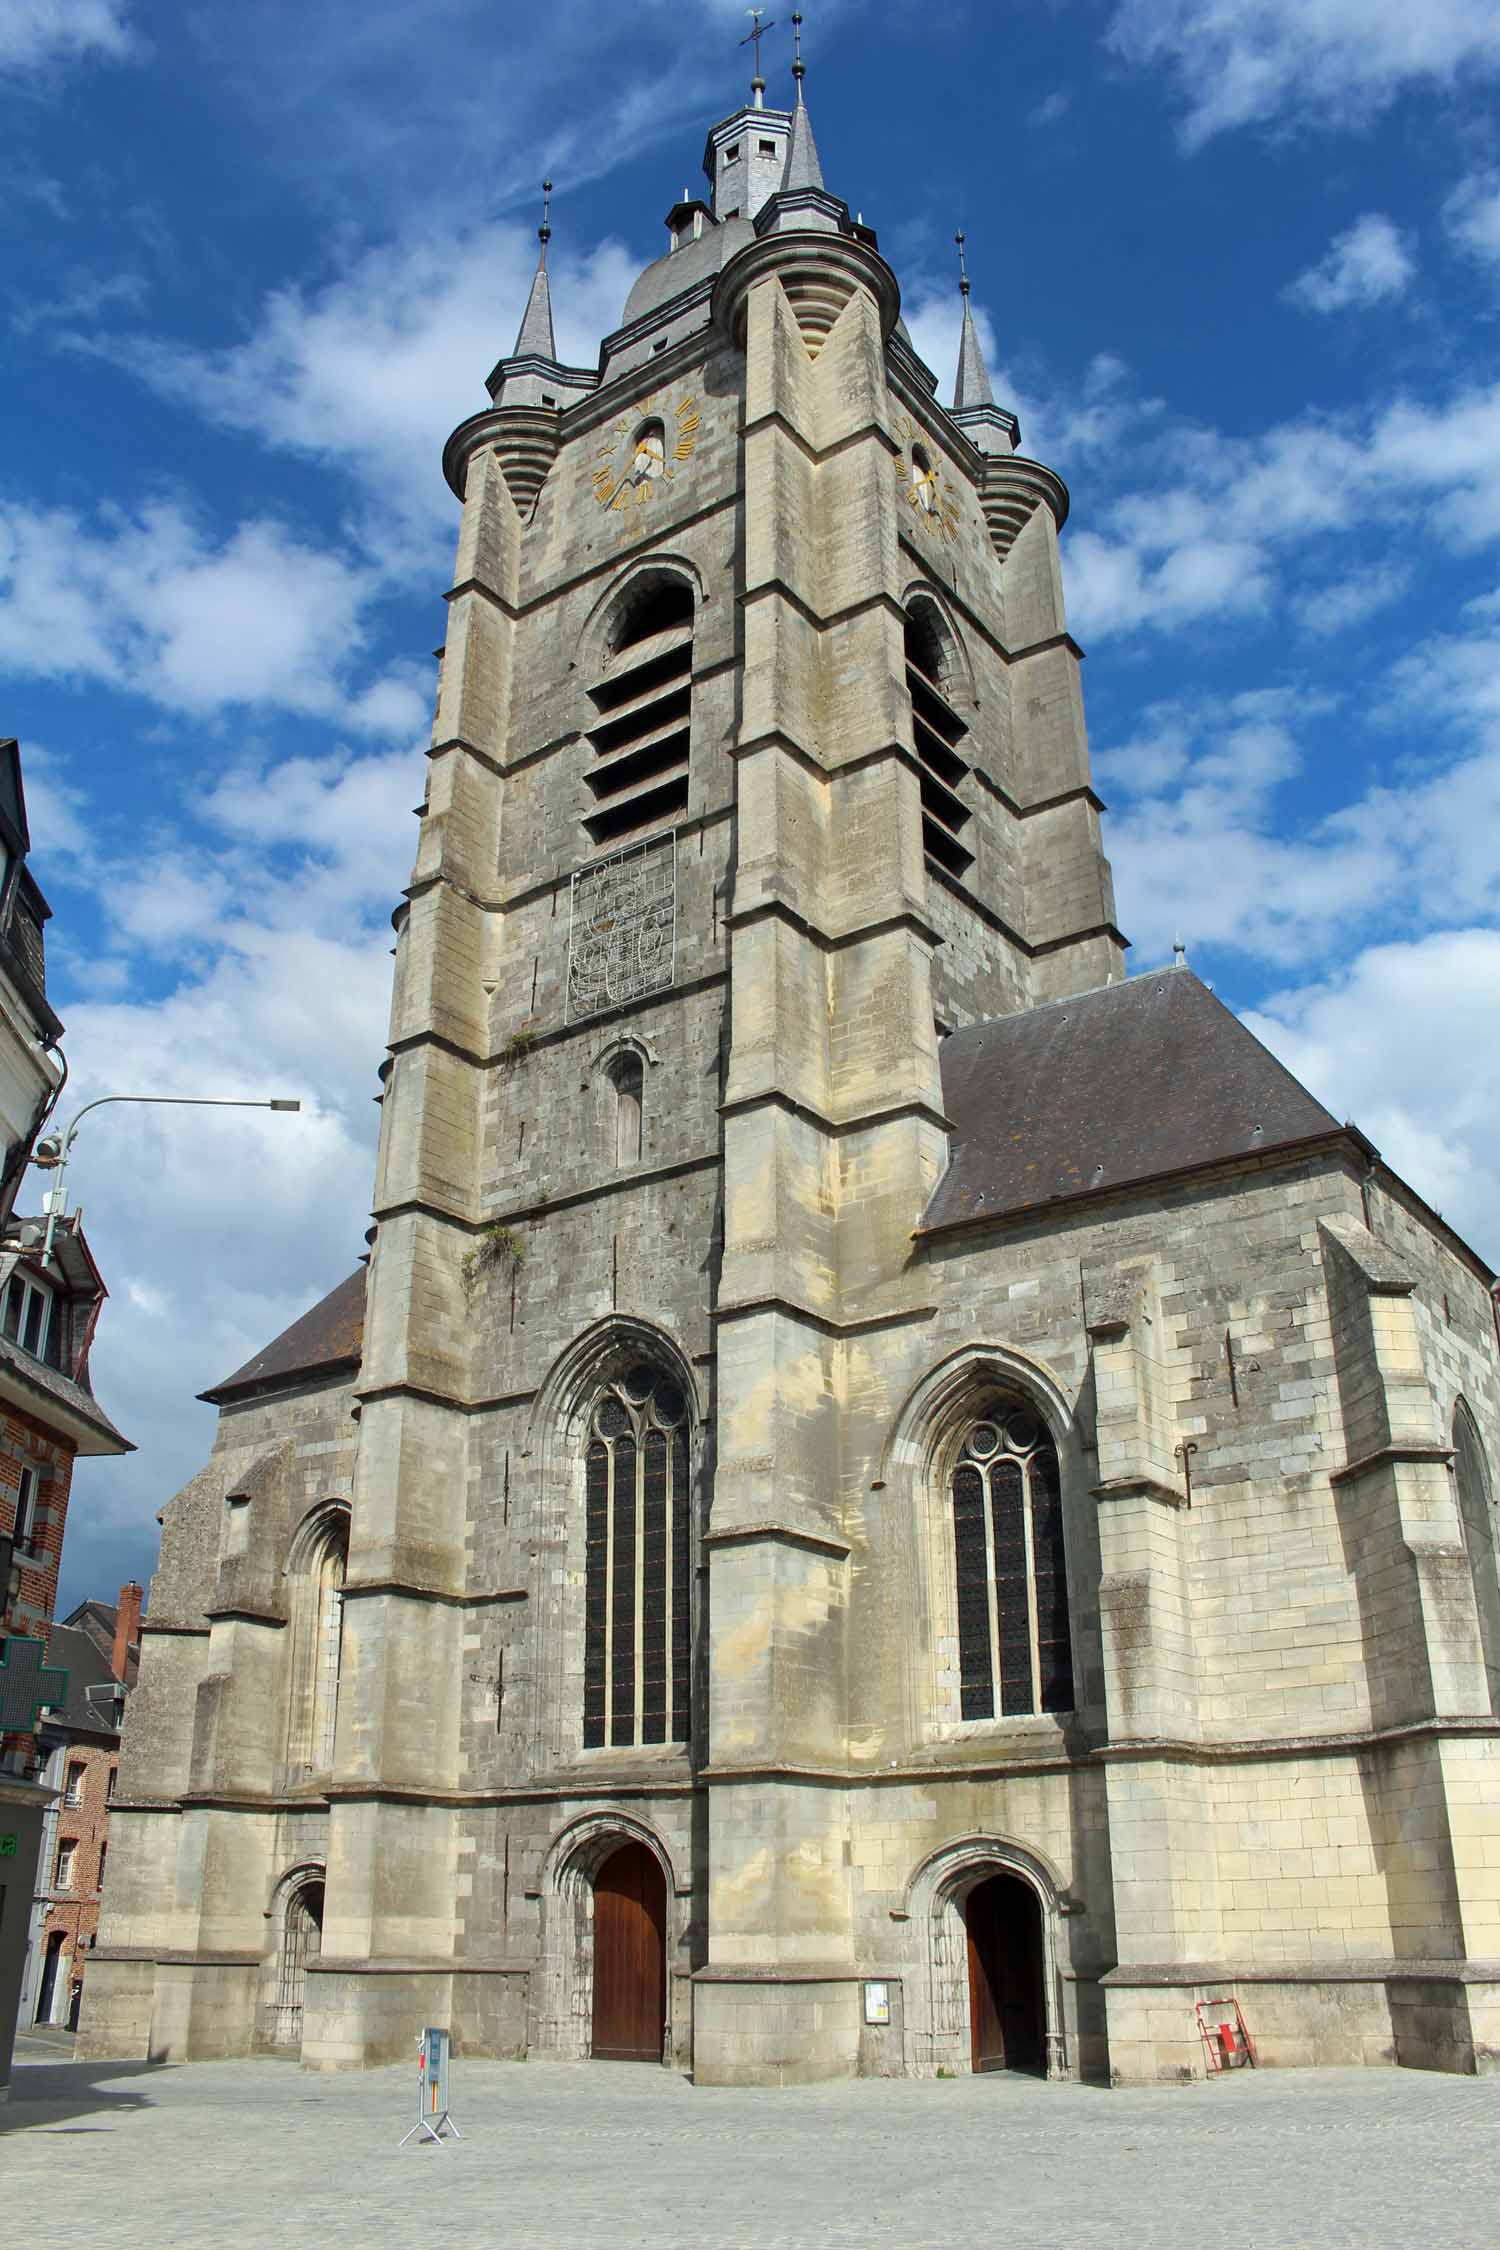 Avesnes-sur-Helpe, collégiale Saint-Nicolas